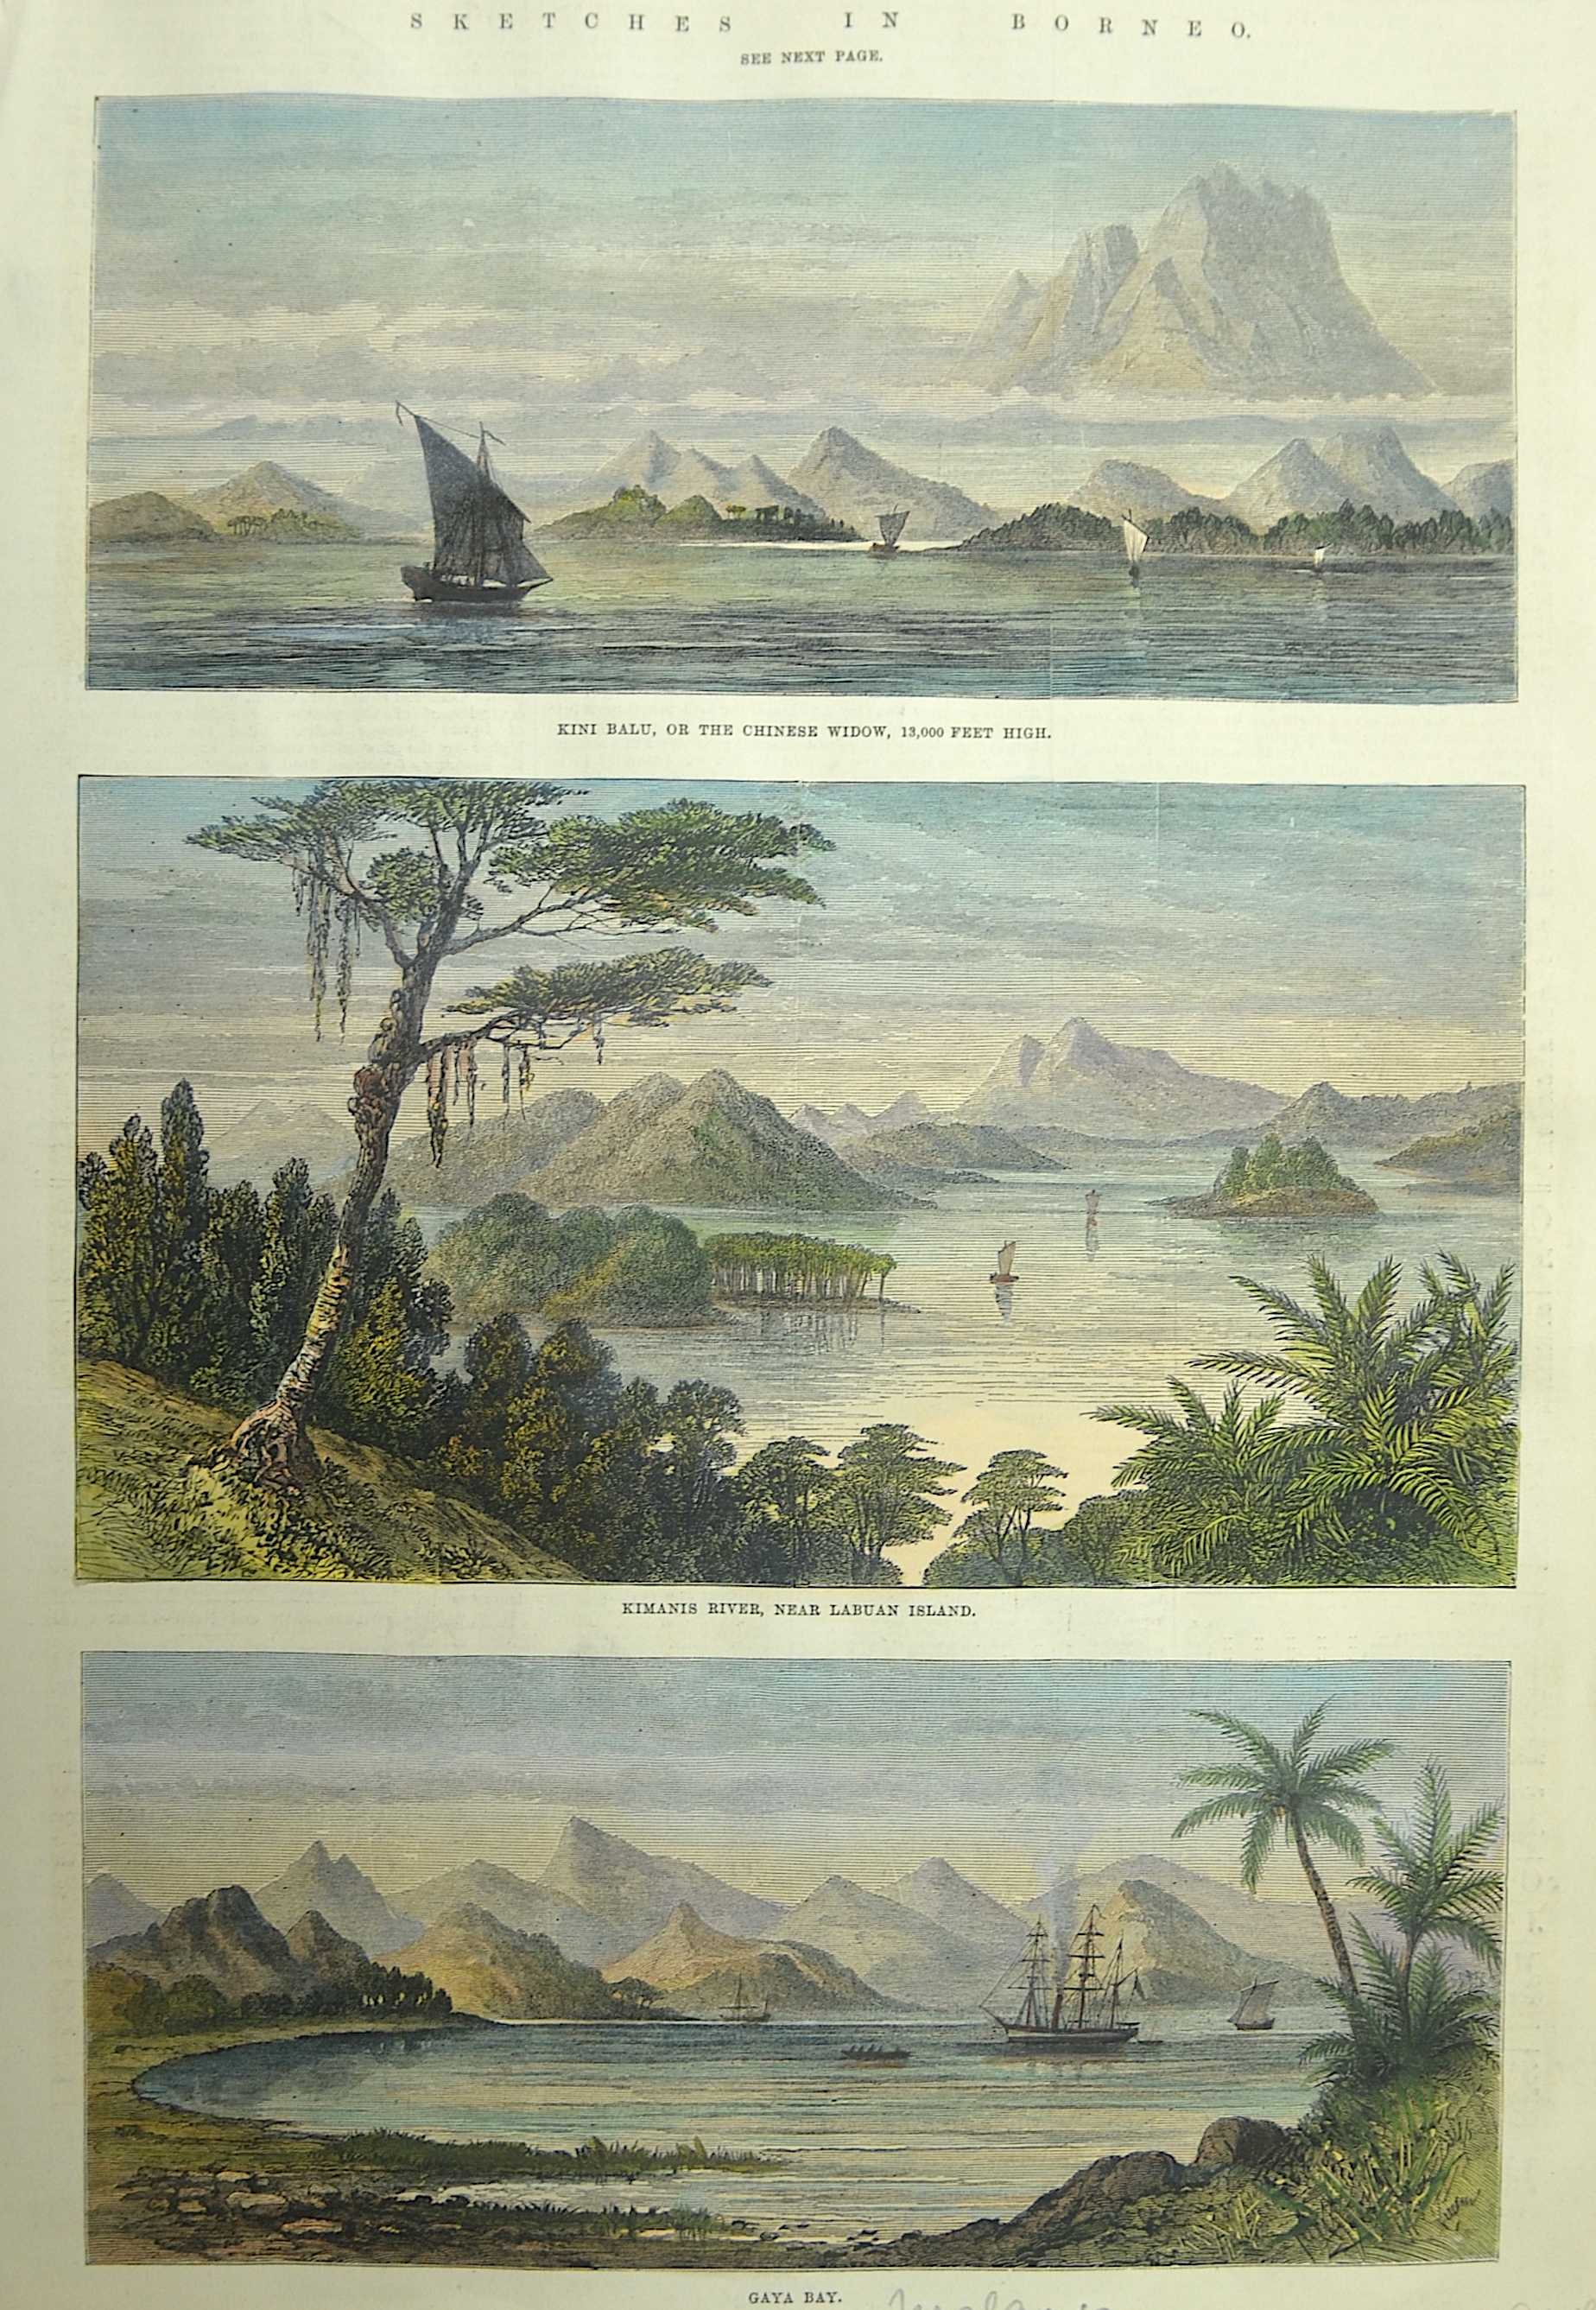 Anonymus  Sketches in Borneo. Kini Balu, or the Chinese Widow, 13,000 feet high./Kimanis River, near Labuan Island /Gaya Bay.